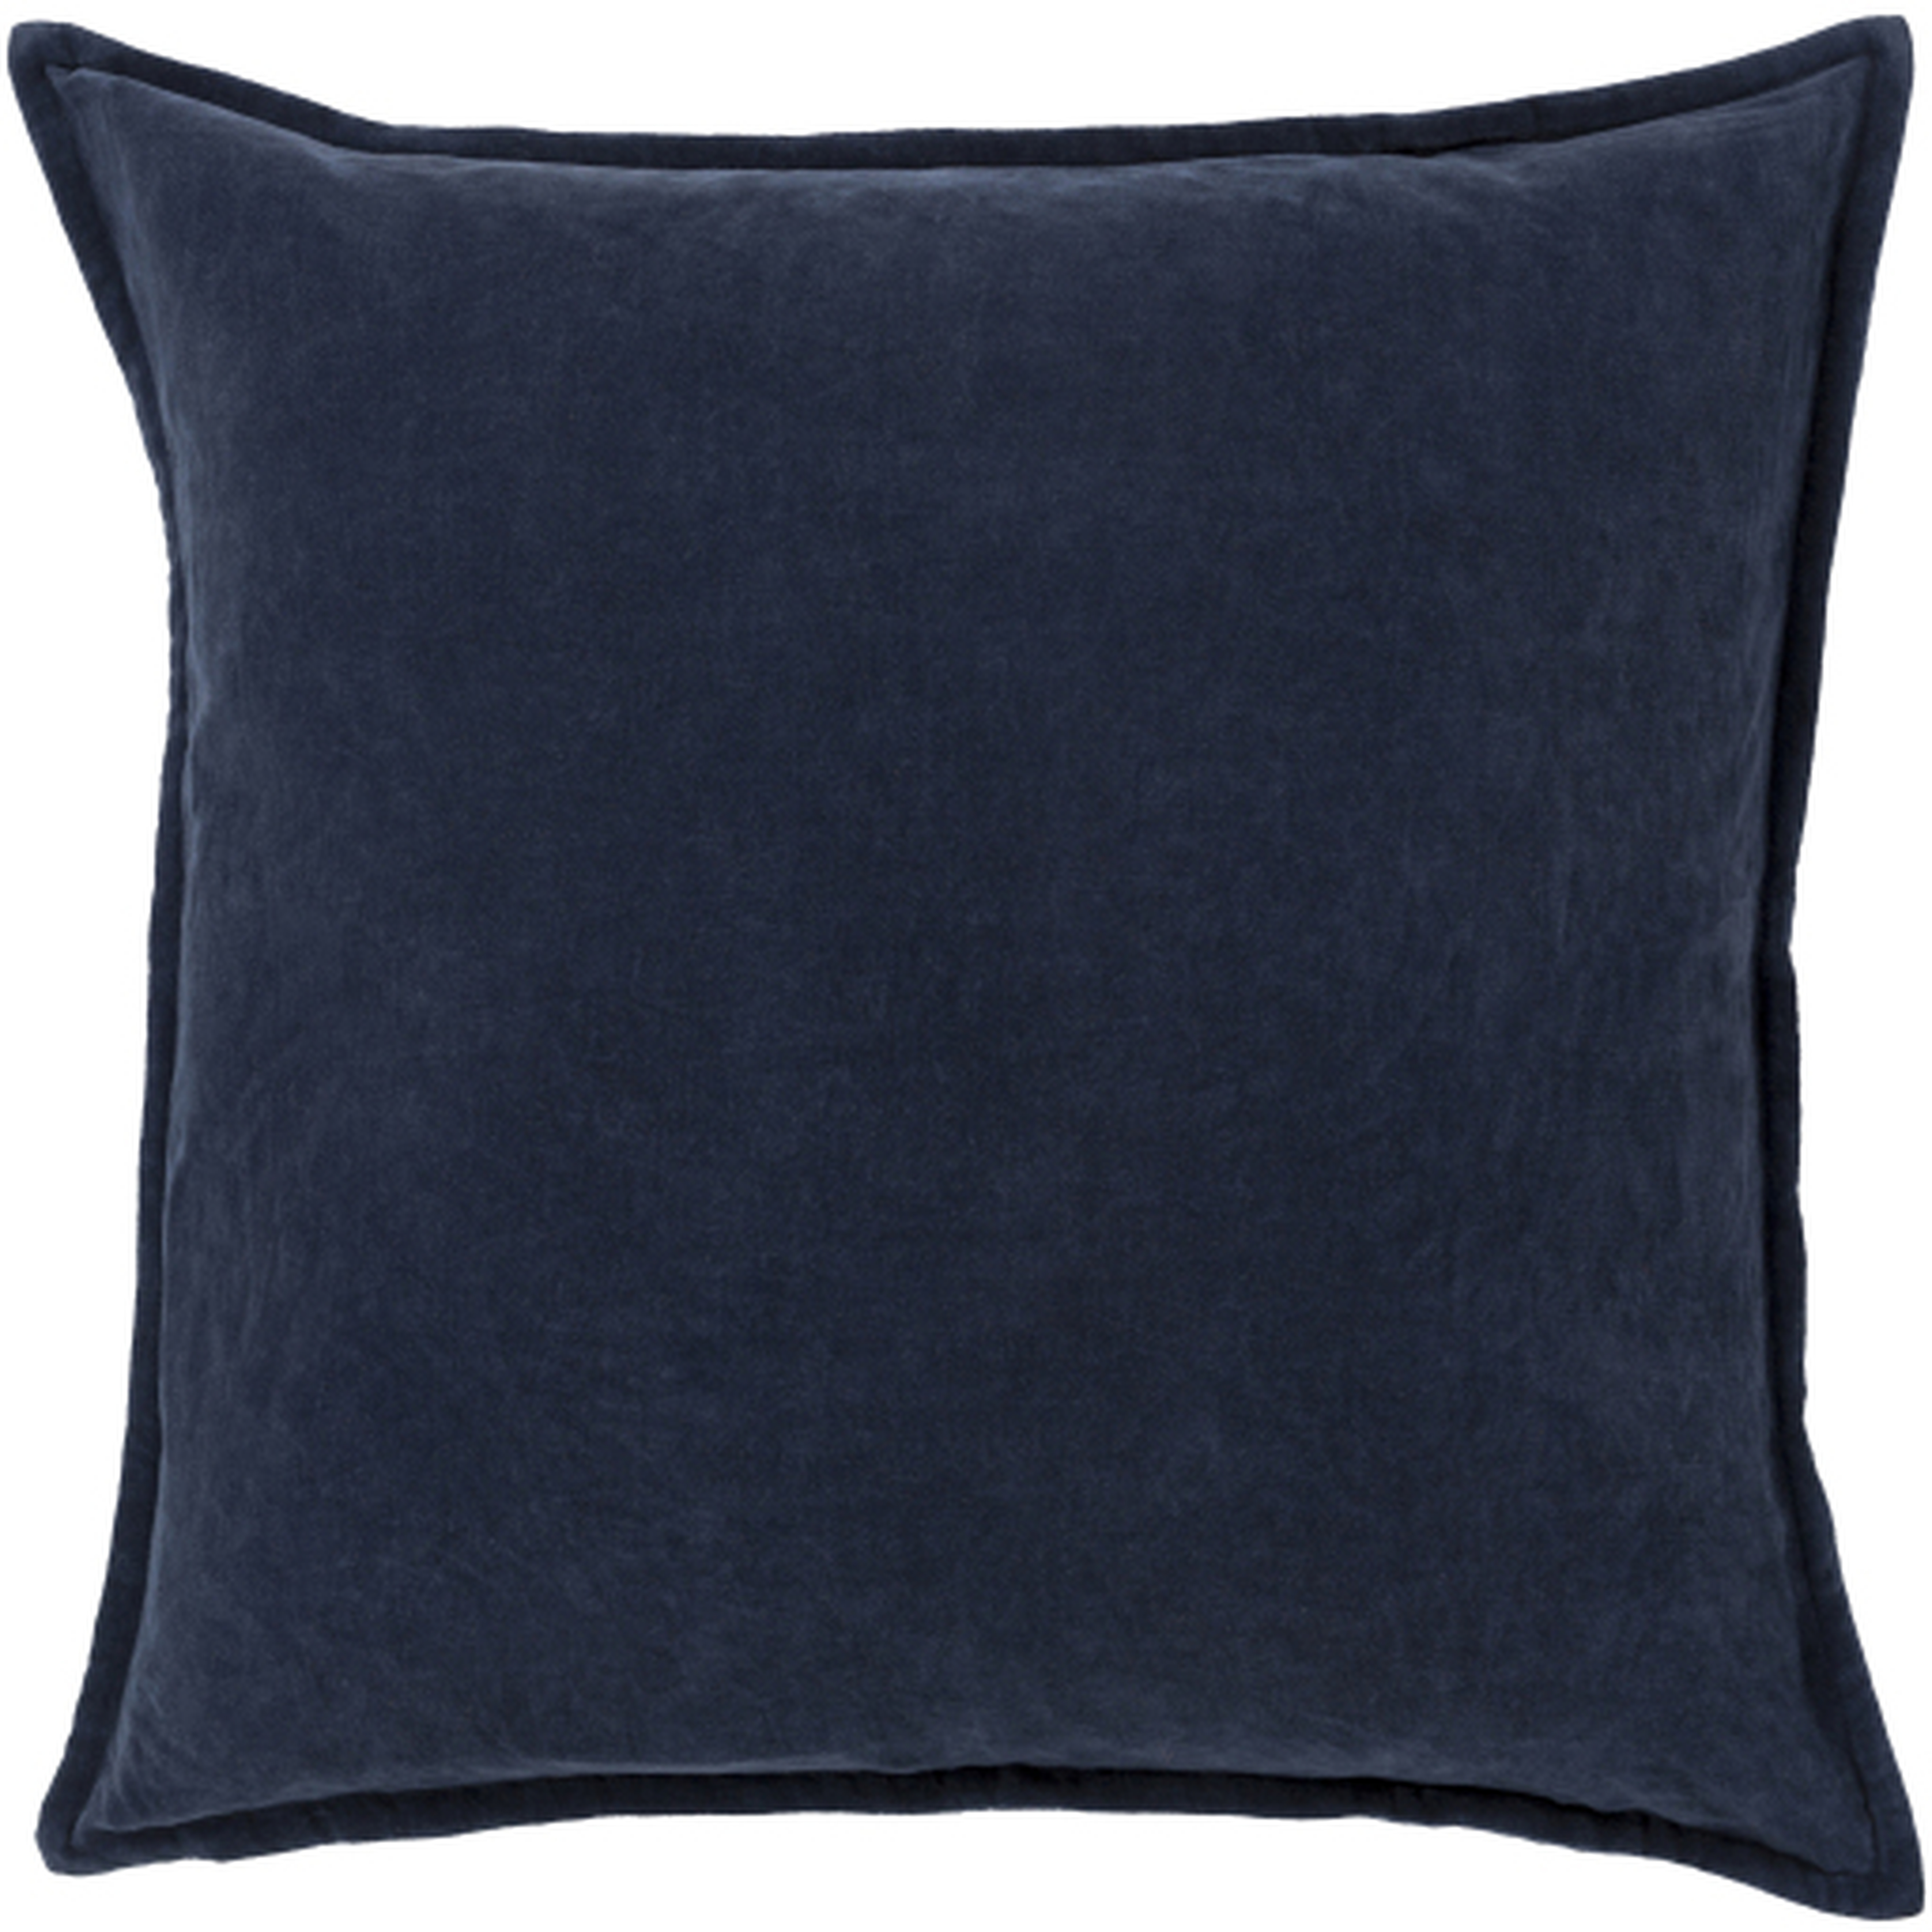 Cotton Velvet Pillow, 22" x 22", Navy - Surya